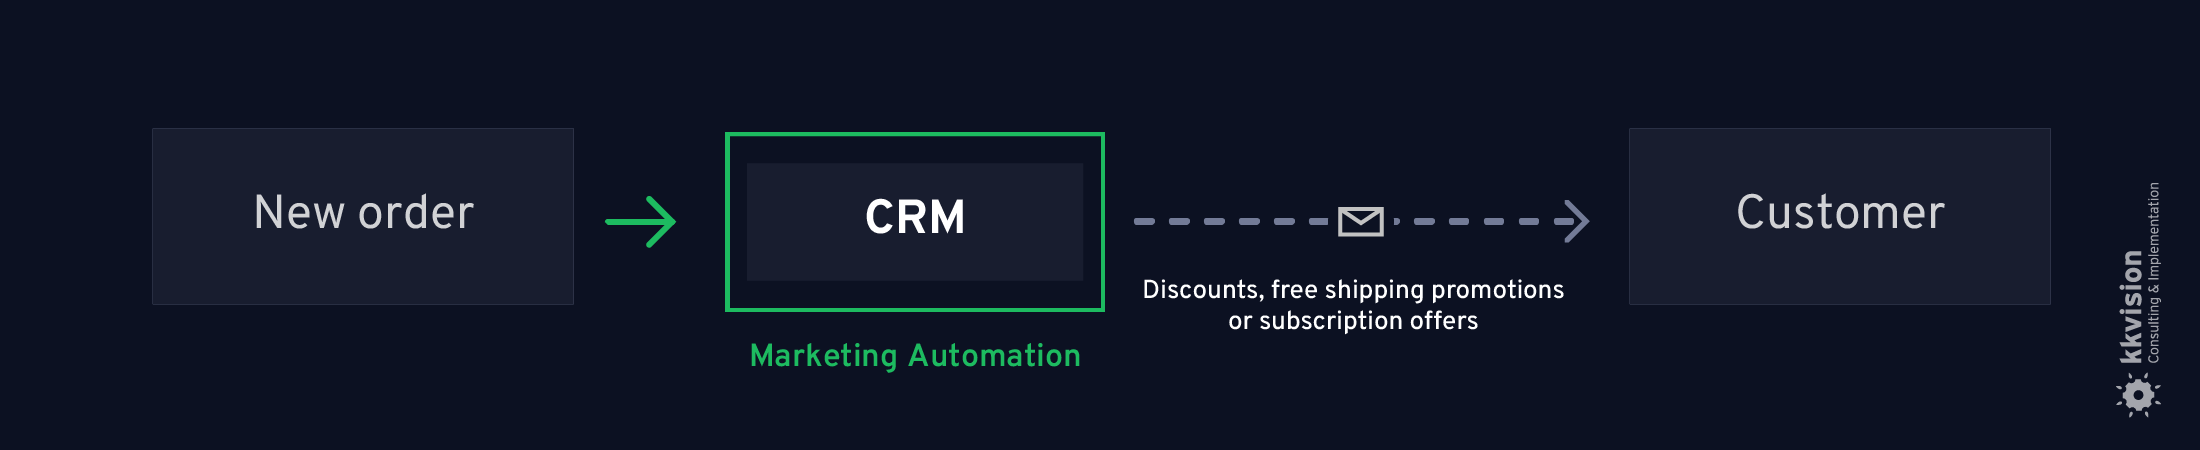 CRM & Marketing Automation_Upsell